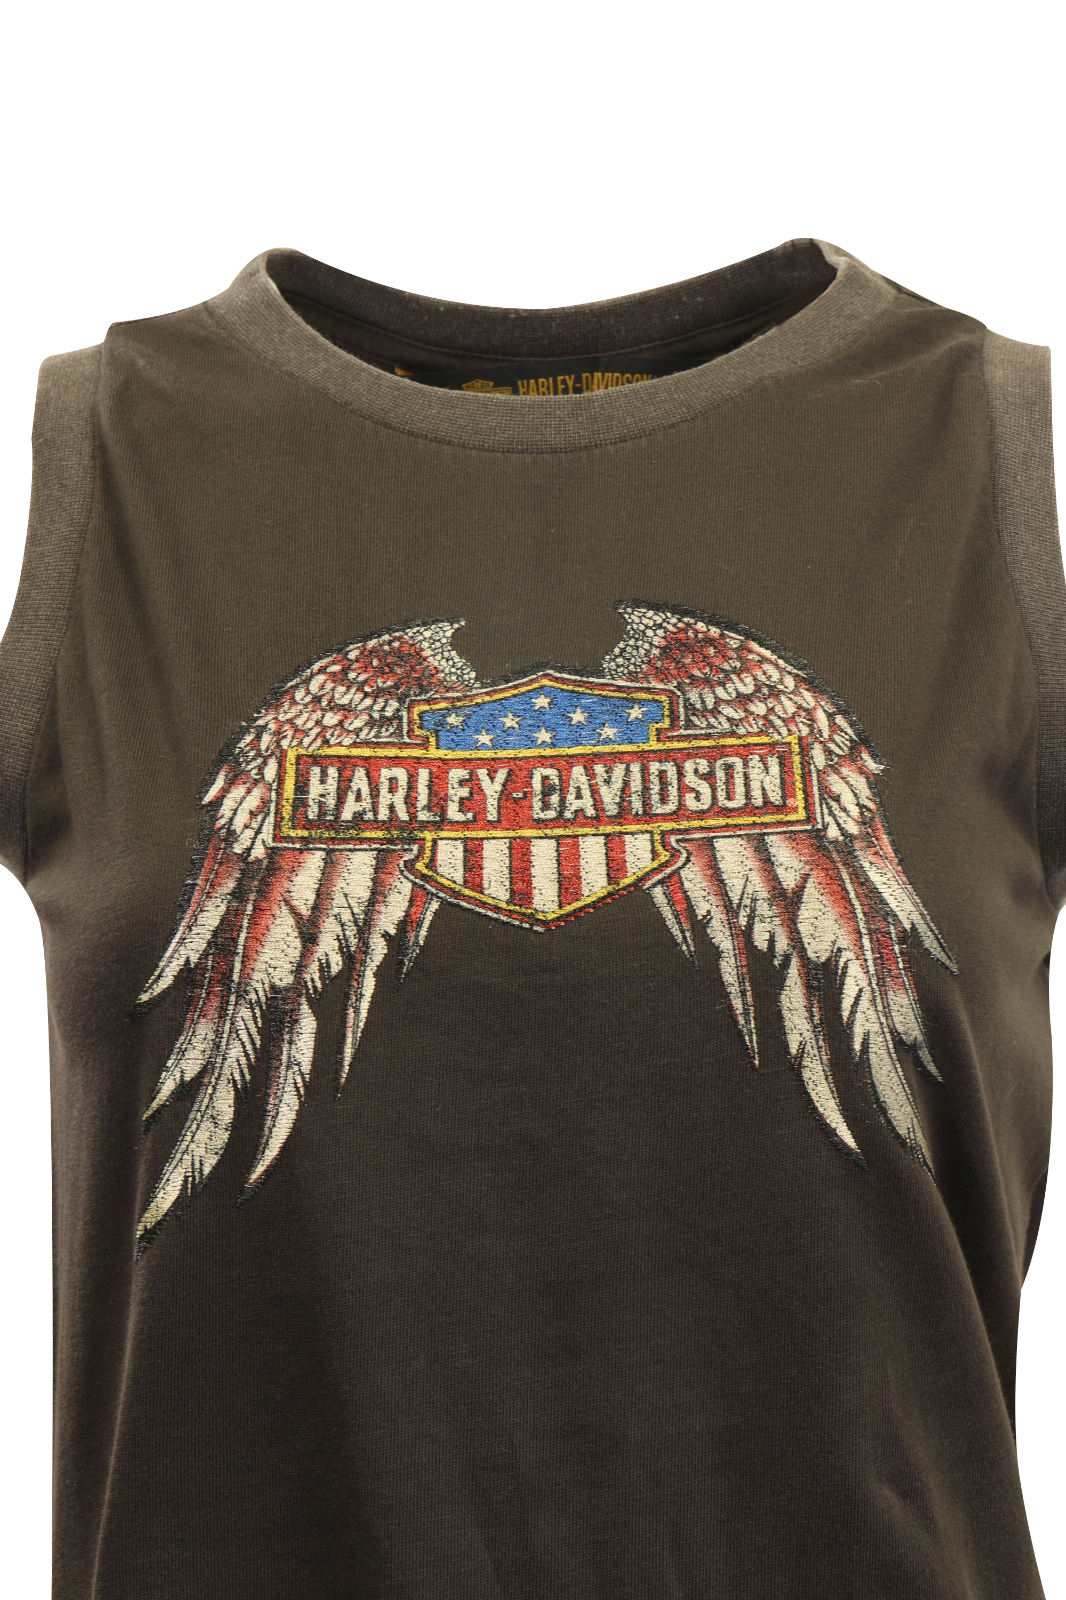 Harley-Davidson Women's Tank Top Dark Grey Embroidered America Eagle Wings (S03)